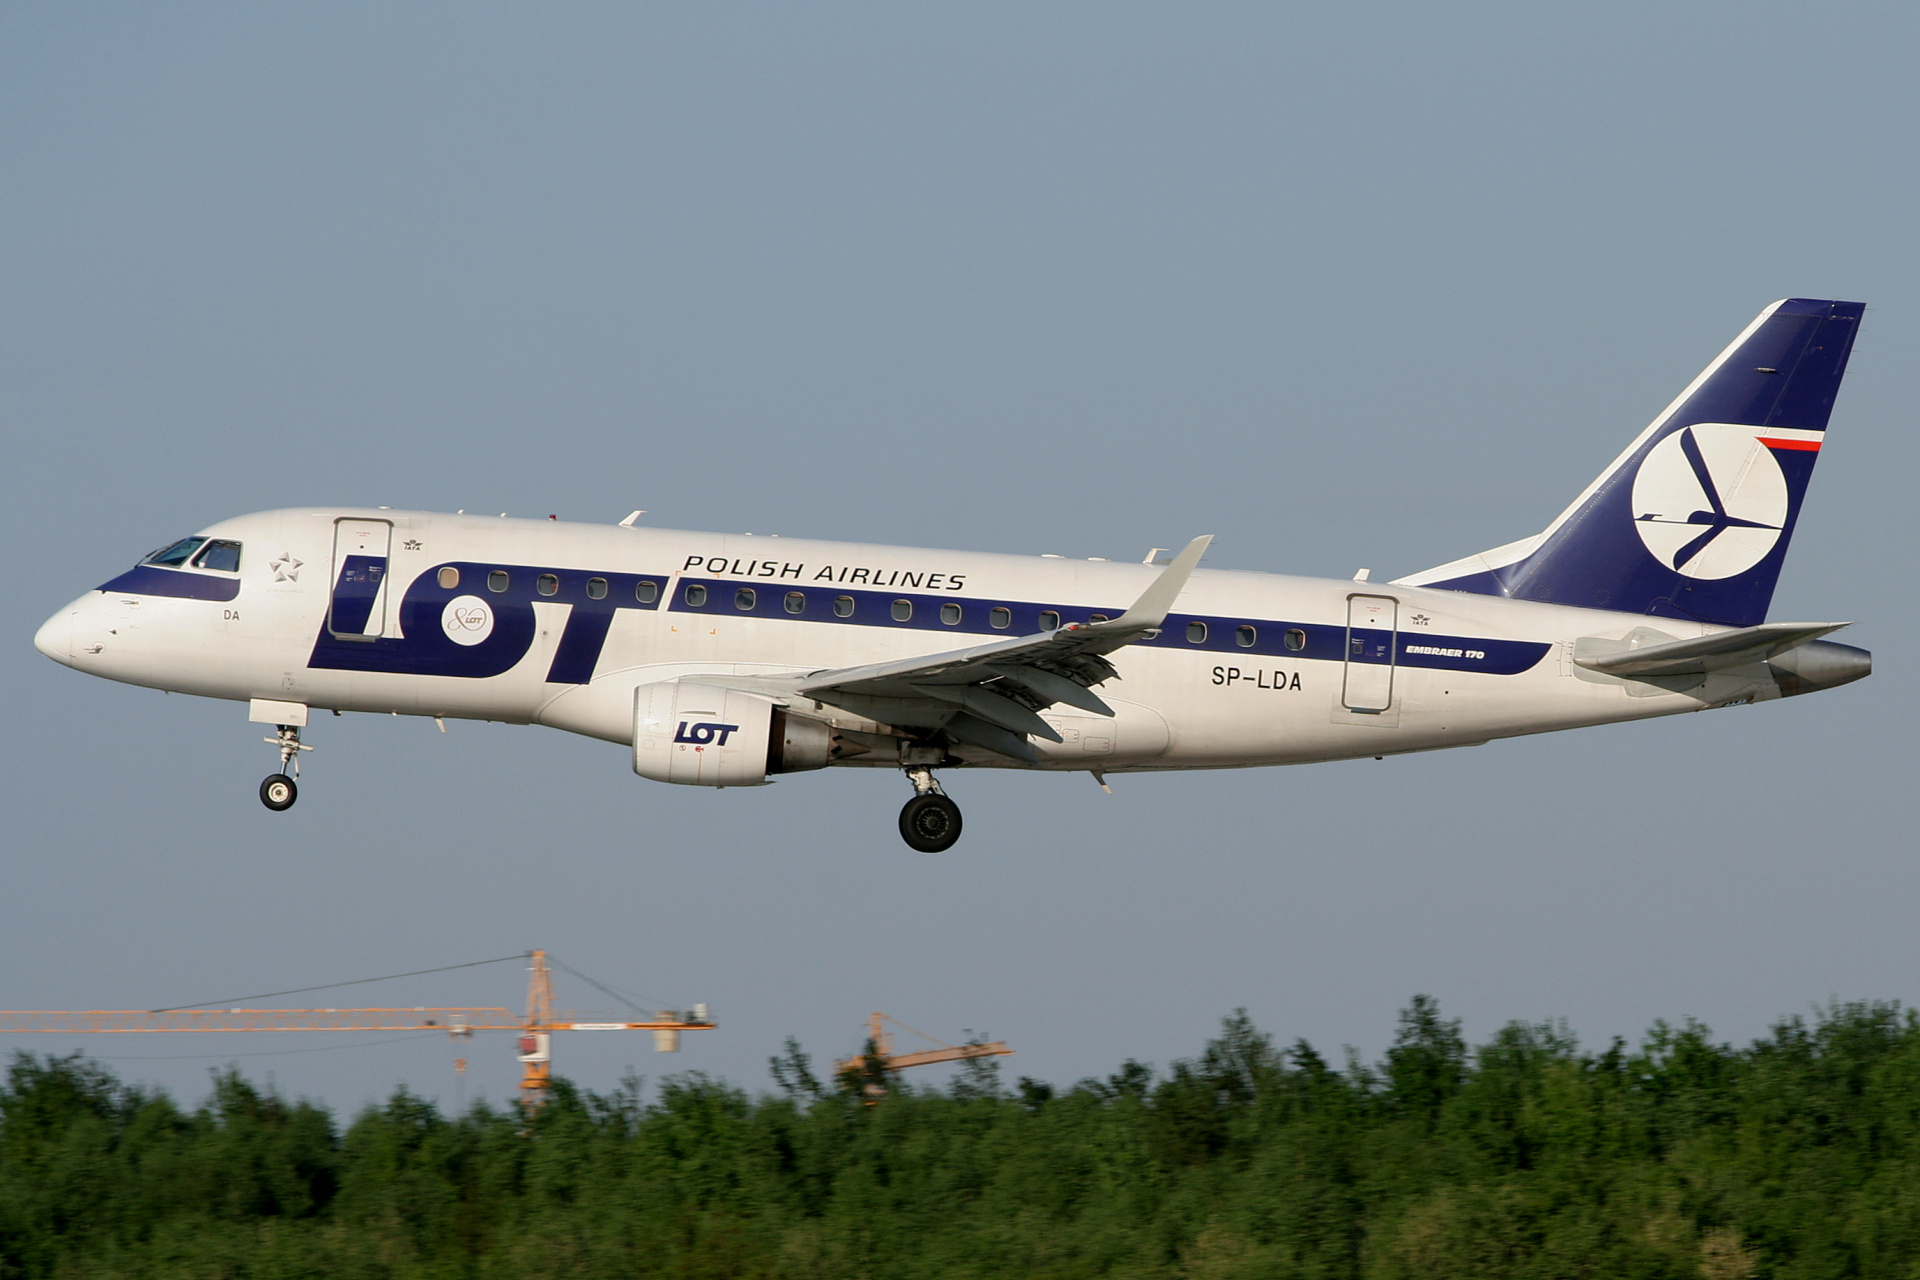 SP-LDA (80th Anniversary sticker) (Aircraft » EPWA Spotting » Embraer E170 » LOT Polish Airlines)